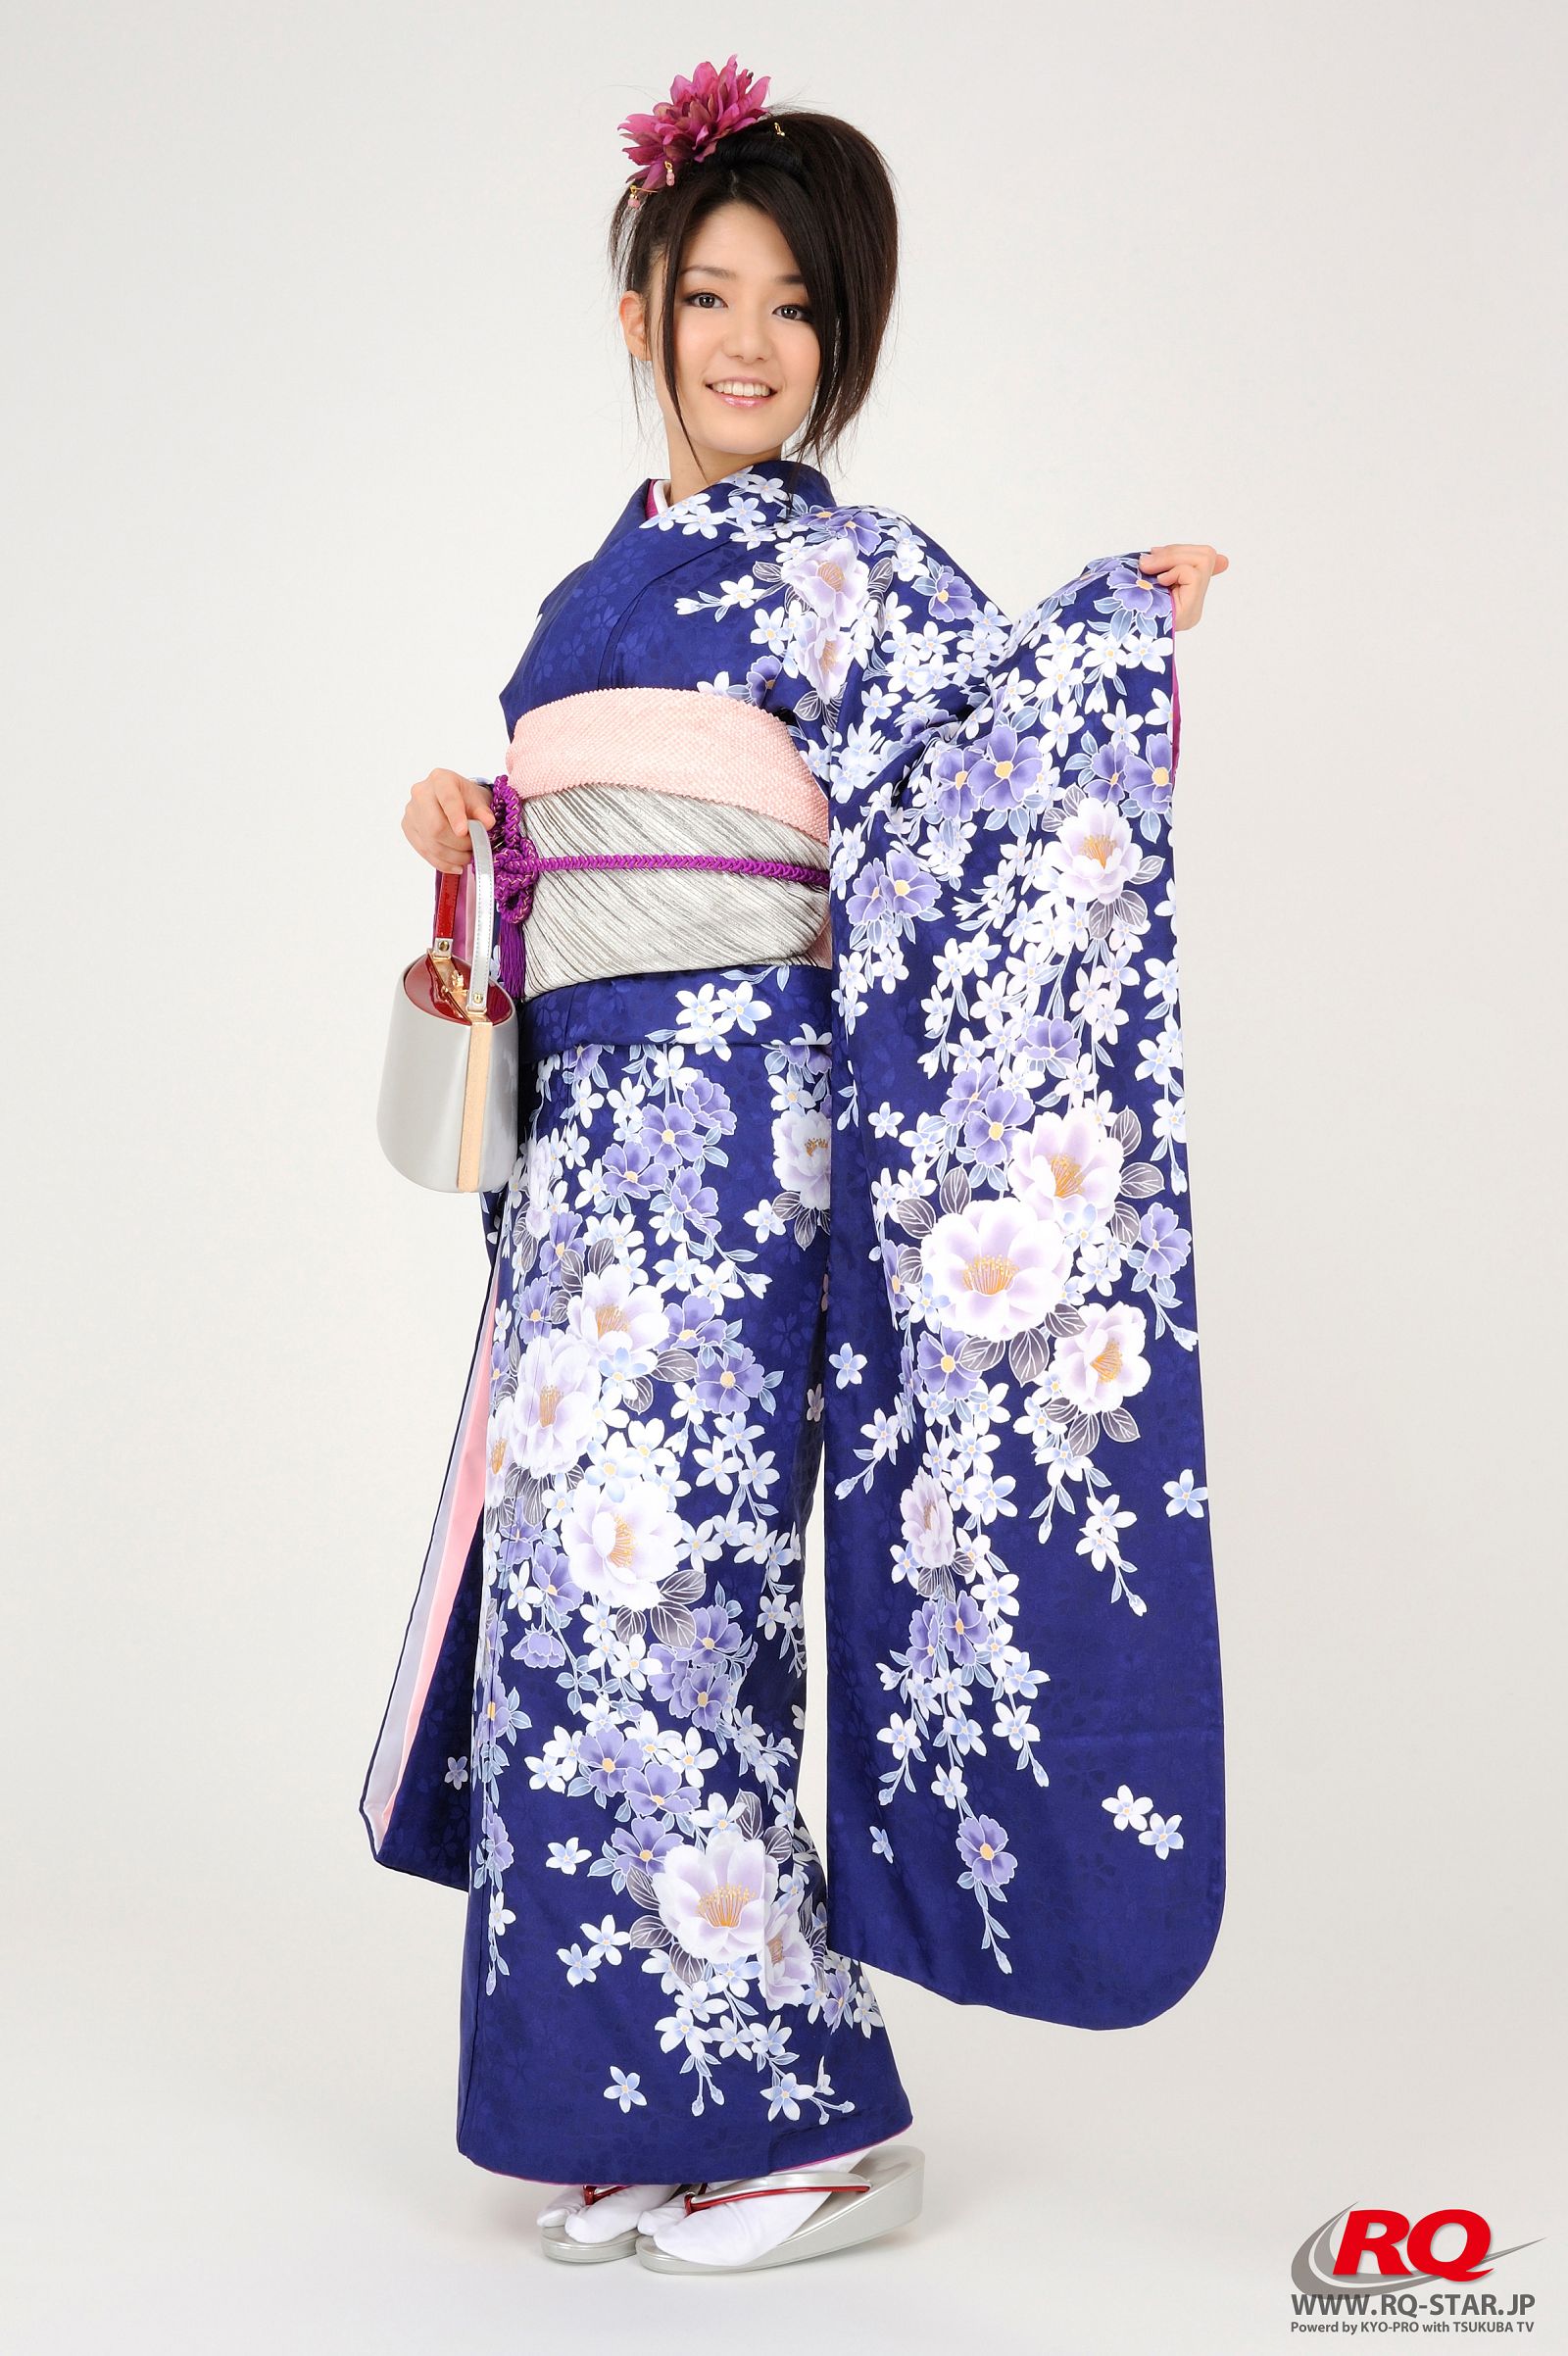 [RQ-STAR美女] NO.0068 Hitomi Furusaki 古崎瞳 謹賀新年 Kimono - Happy New Year3